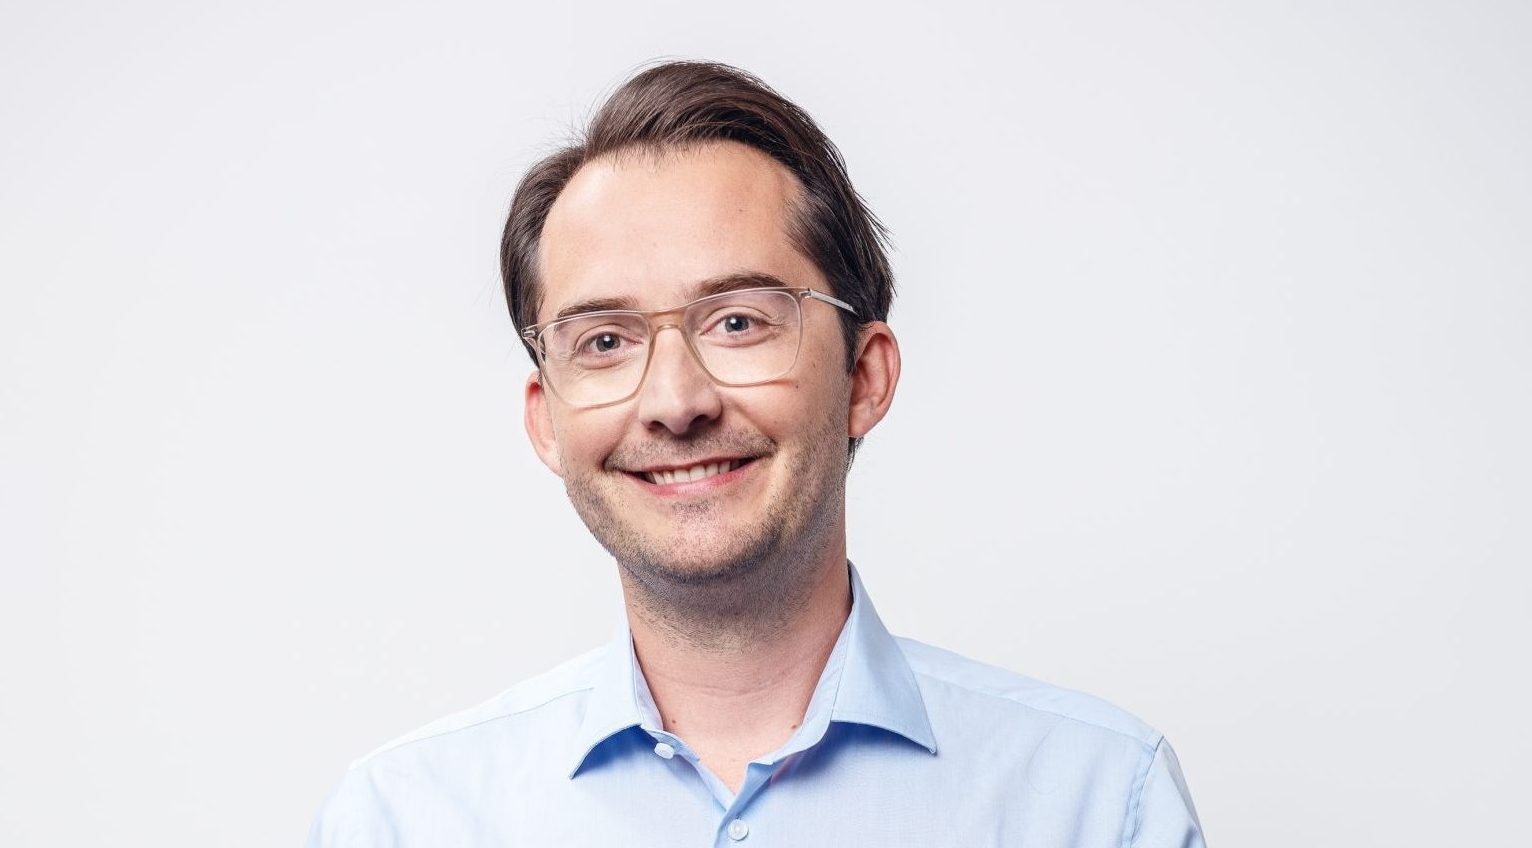 Christian Weiss, founding partner at Heal Capital